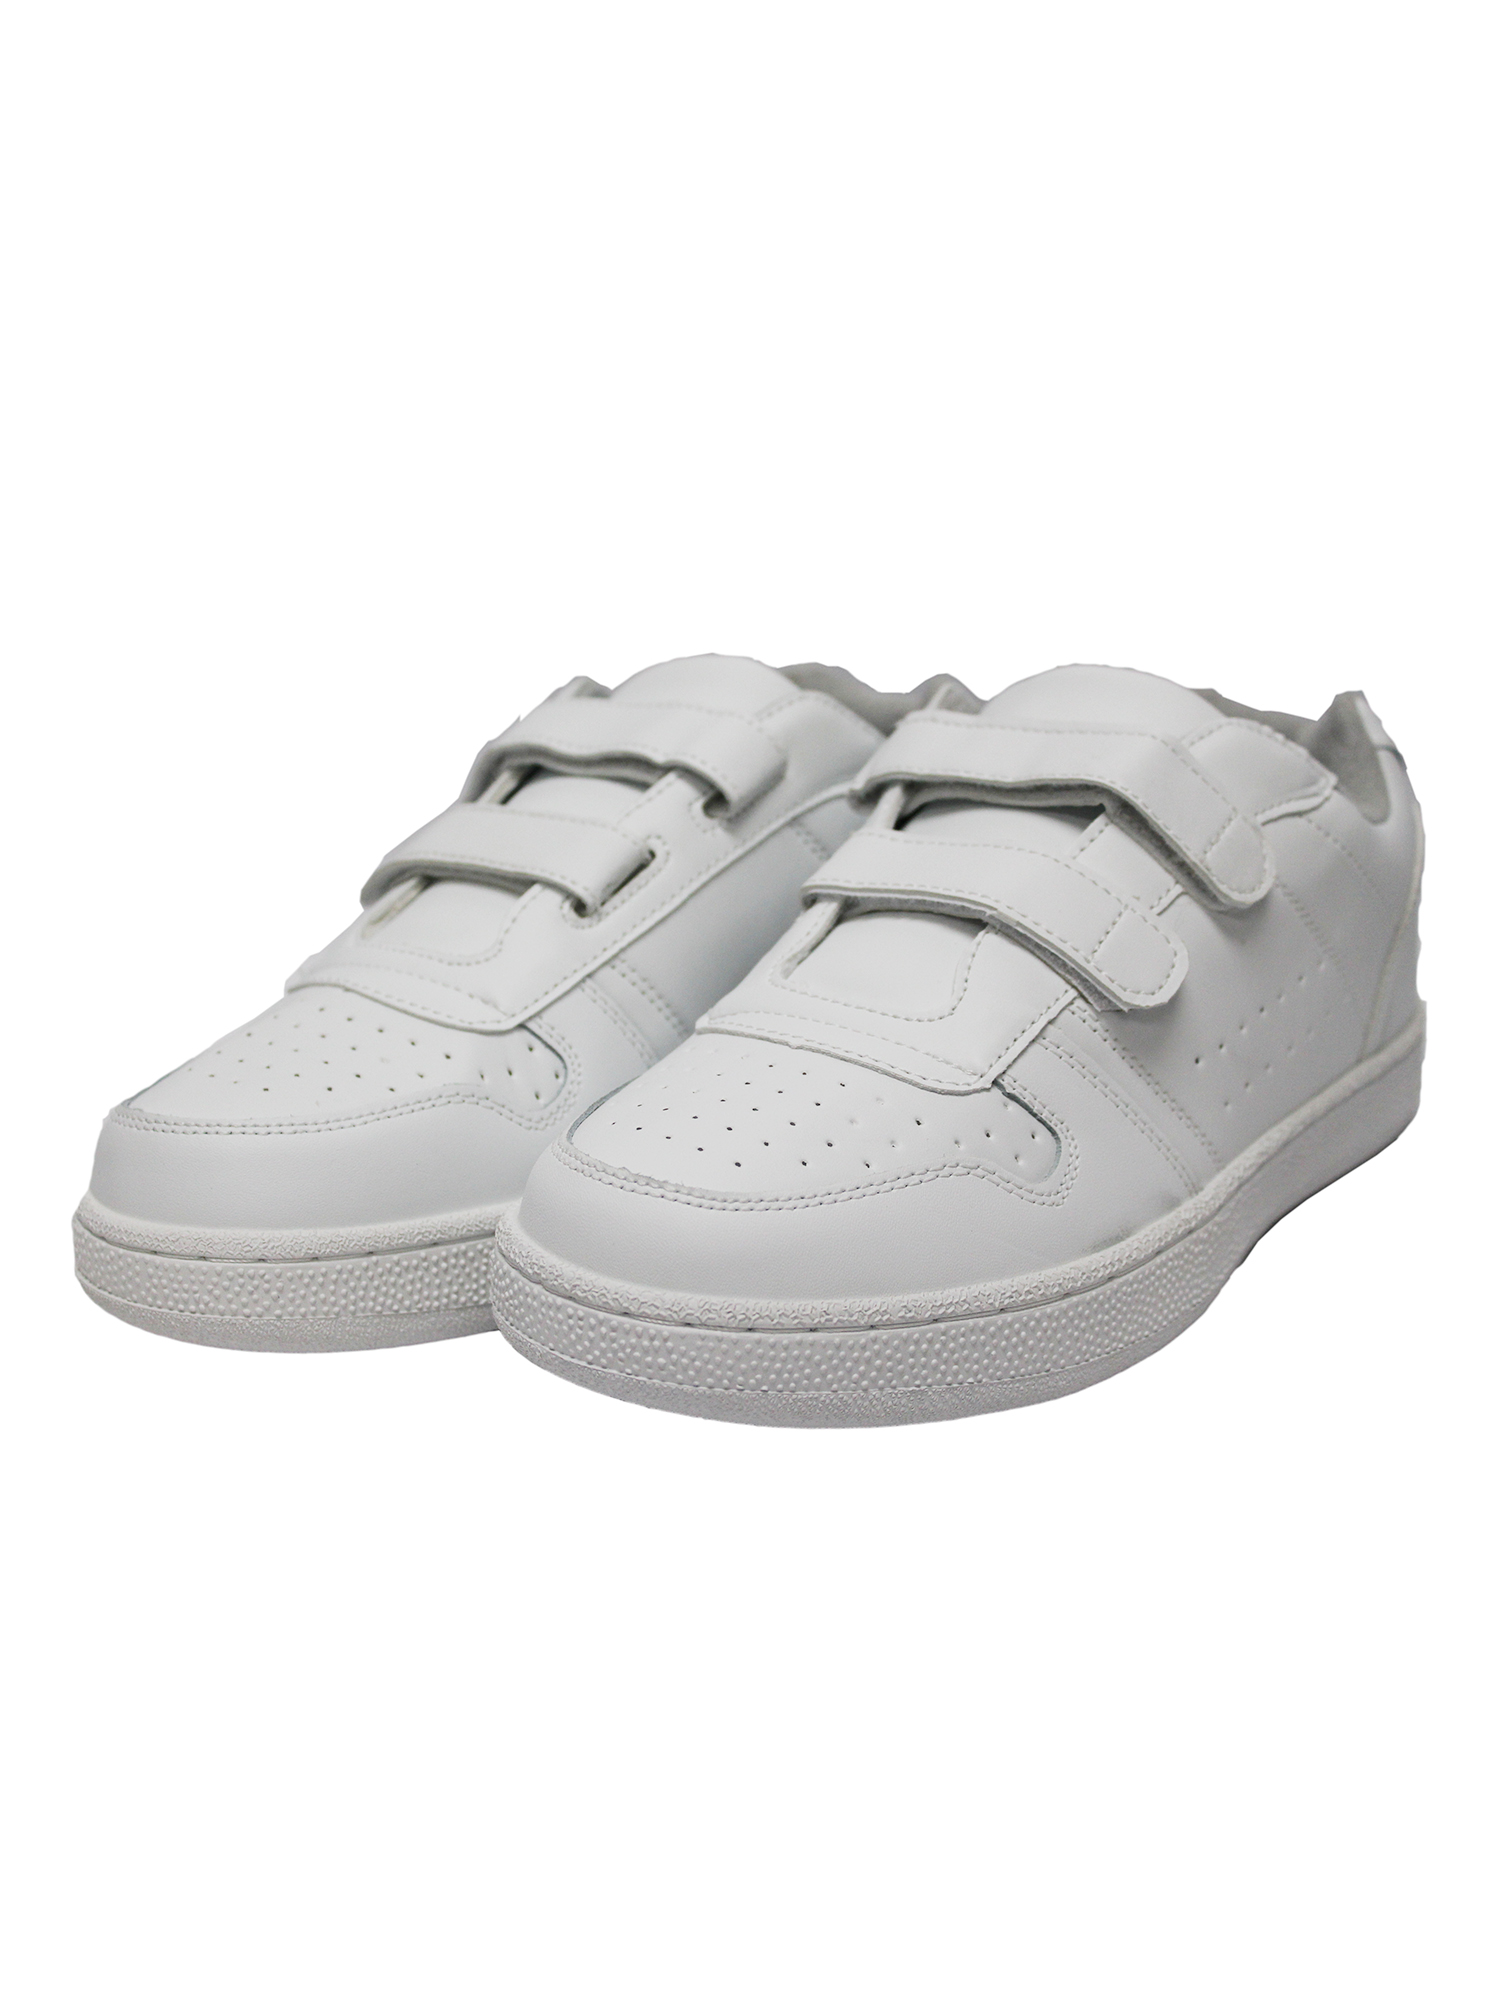 Tanleewa Men's Leather Strap Sneakers Lightweight Hook and Loop Walking Shoe Size 8.5 Adult Male - image 2 of 5